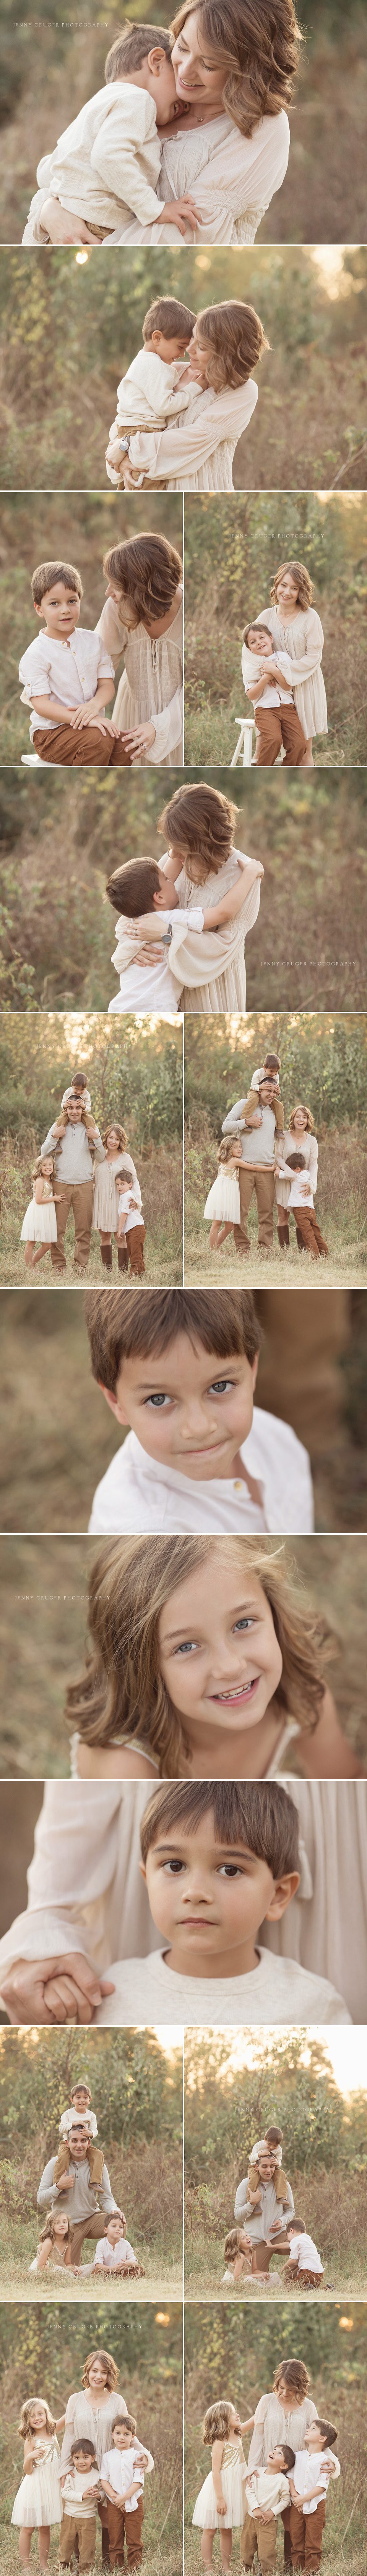 nashville family photography family in golden field